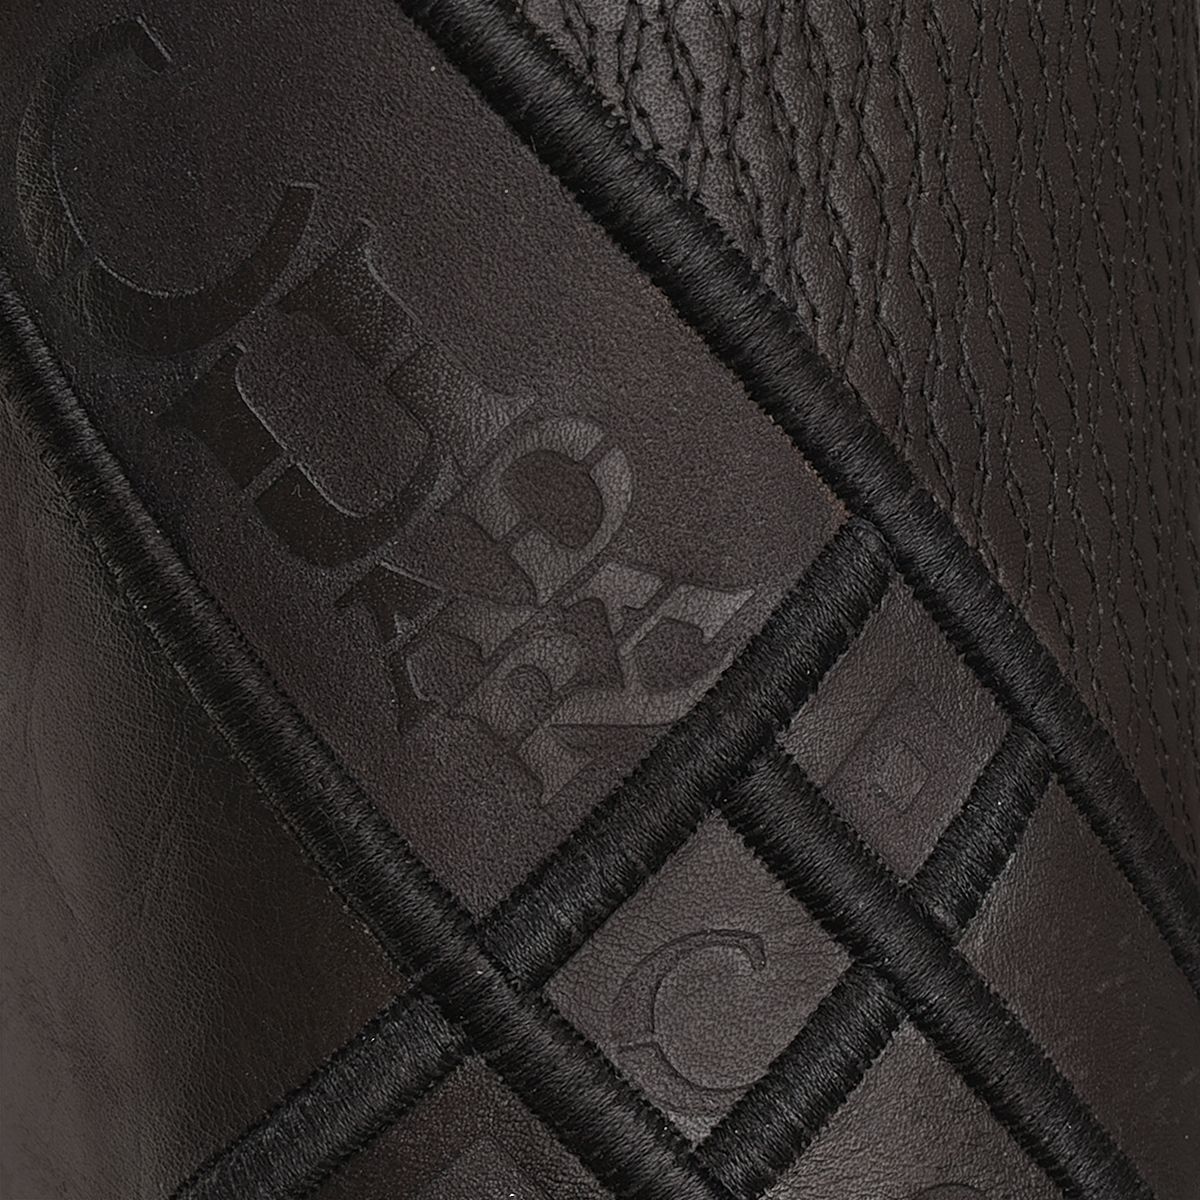 1J2MRS - Cuadra black casual cowboy cowhide leather boots for men-Kuet.us